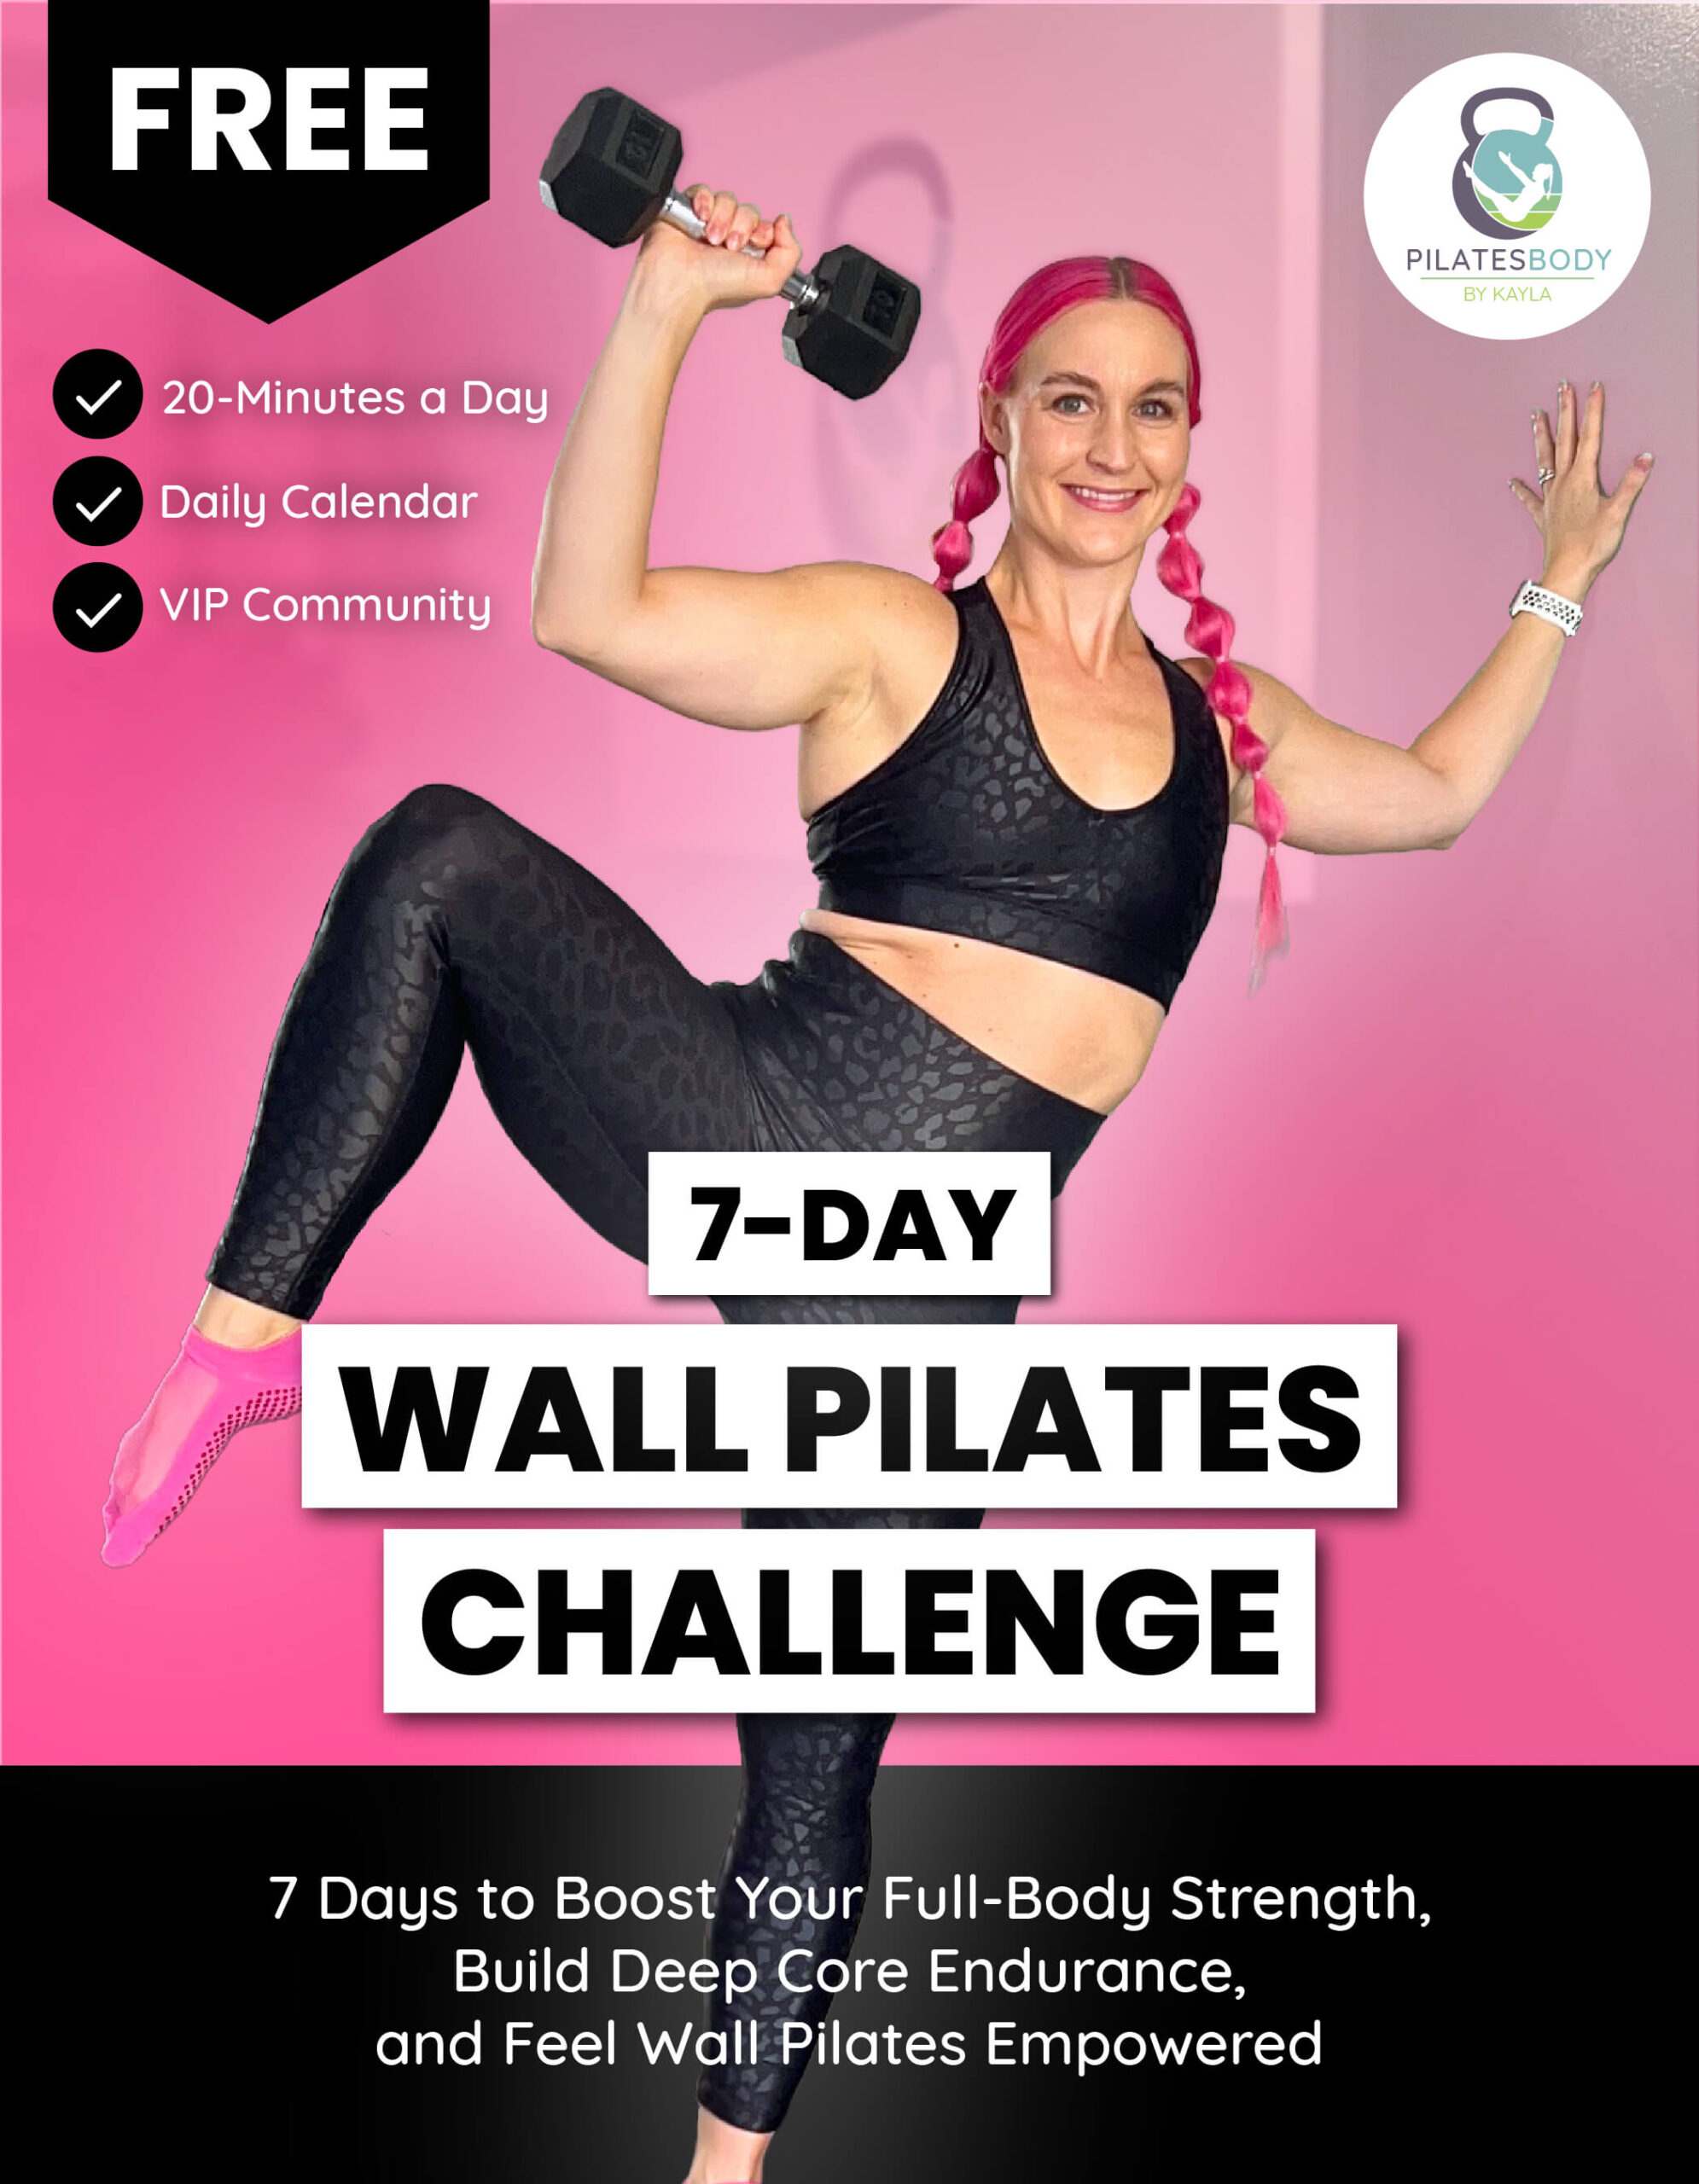 Free 7-Day Wall Pilates Challenge Full Body Strength Pilates Body by Kayla